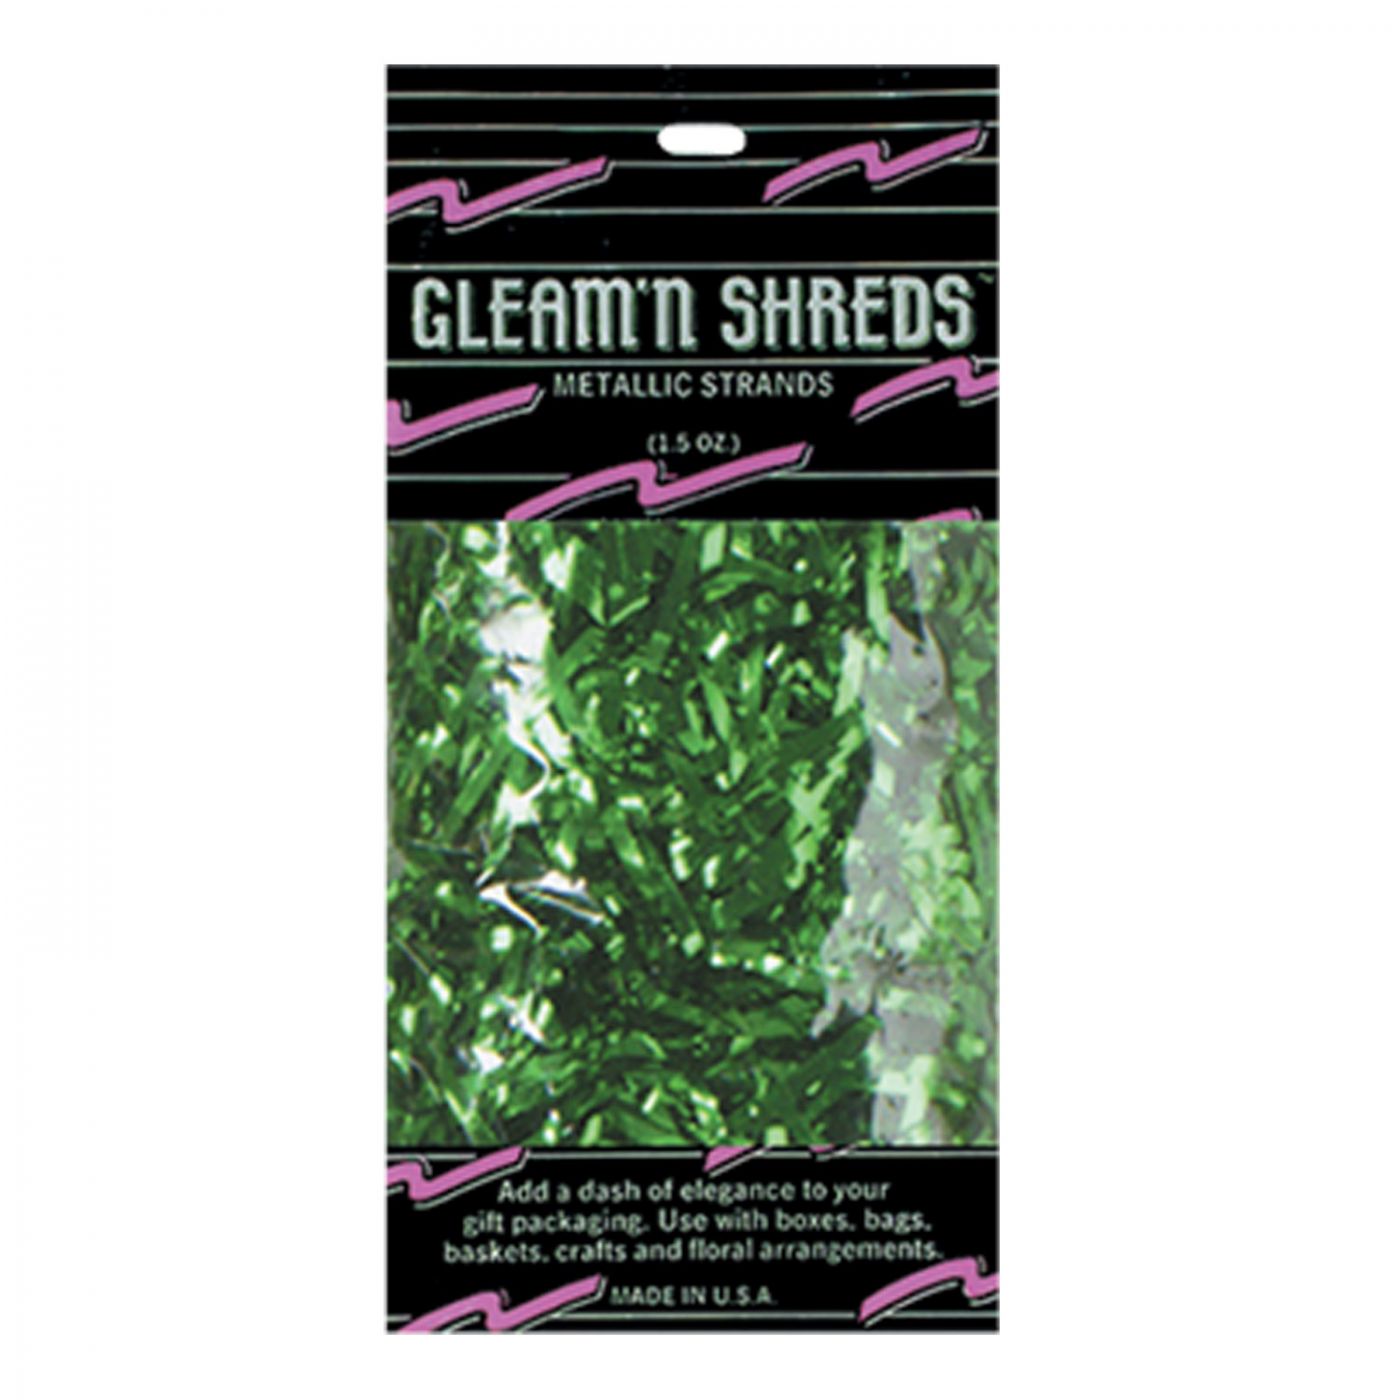 Gleam 'N Shreds Metallic Strands image